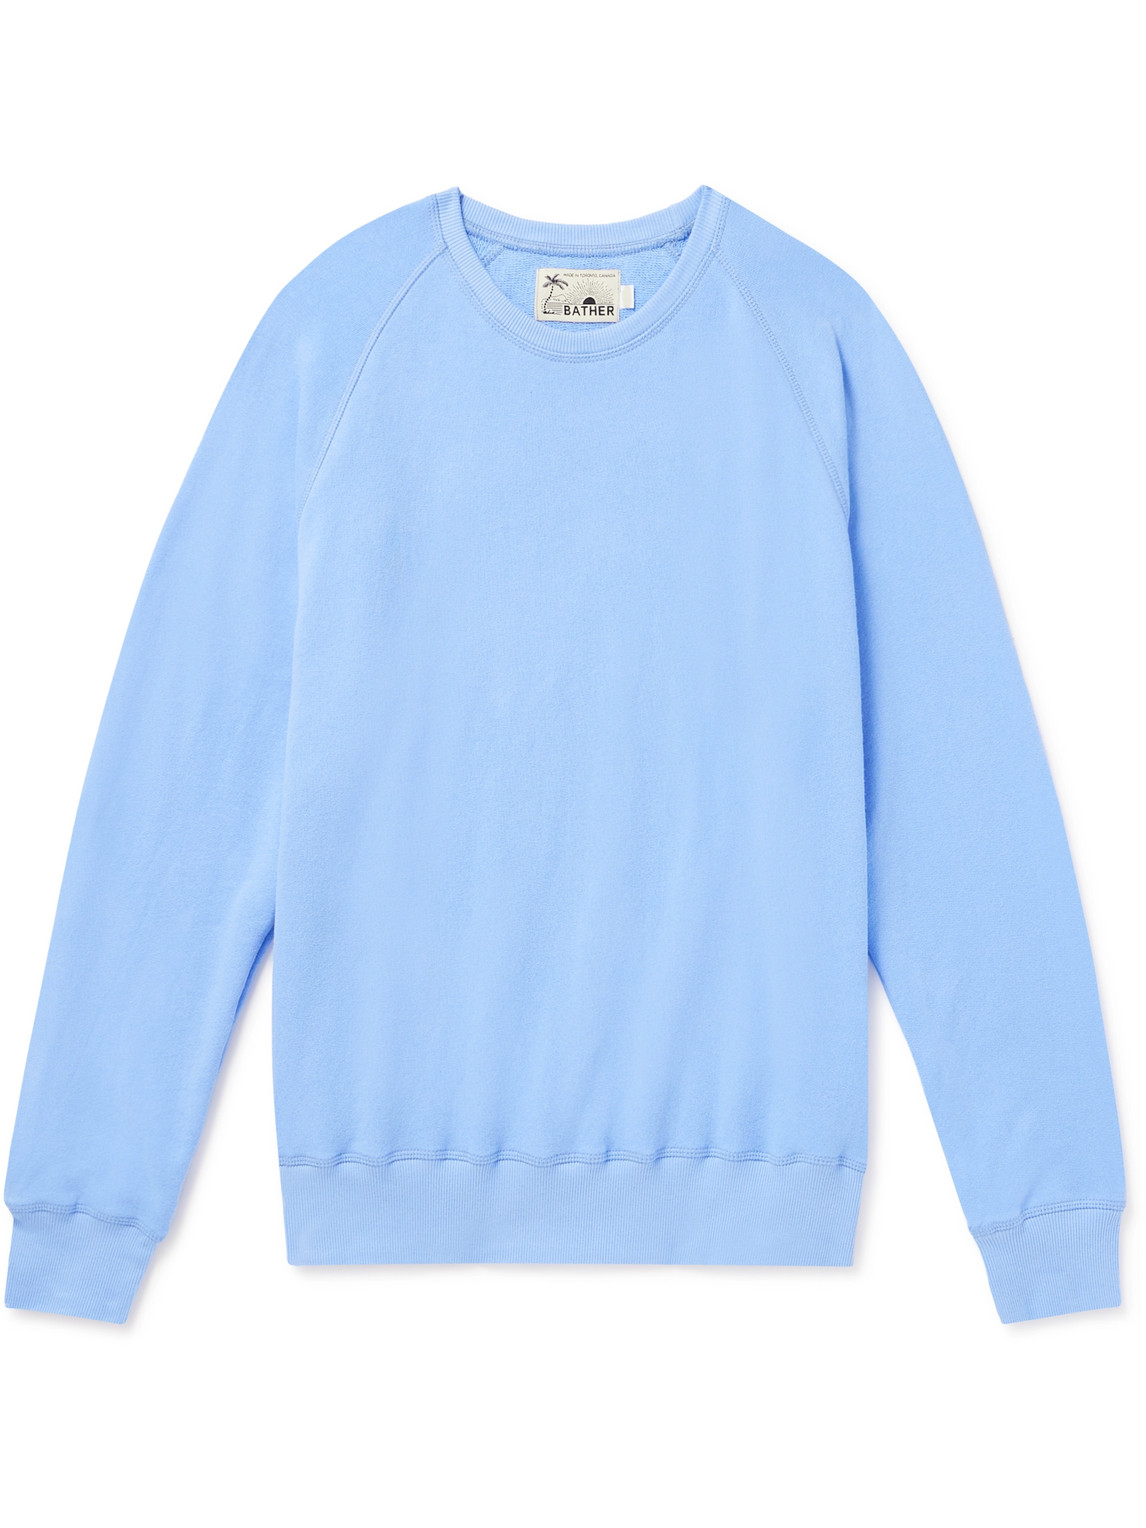 Organic Cotton-Jersey Sweatshirt